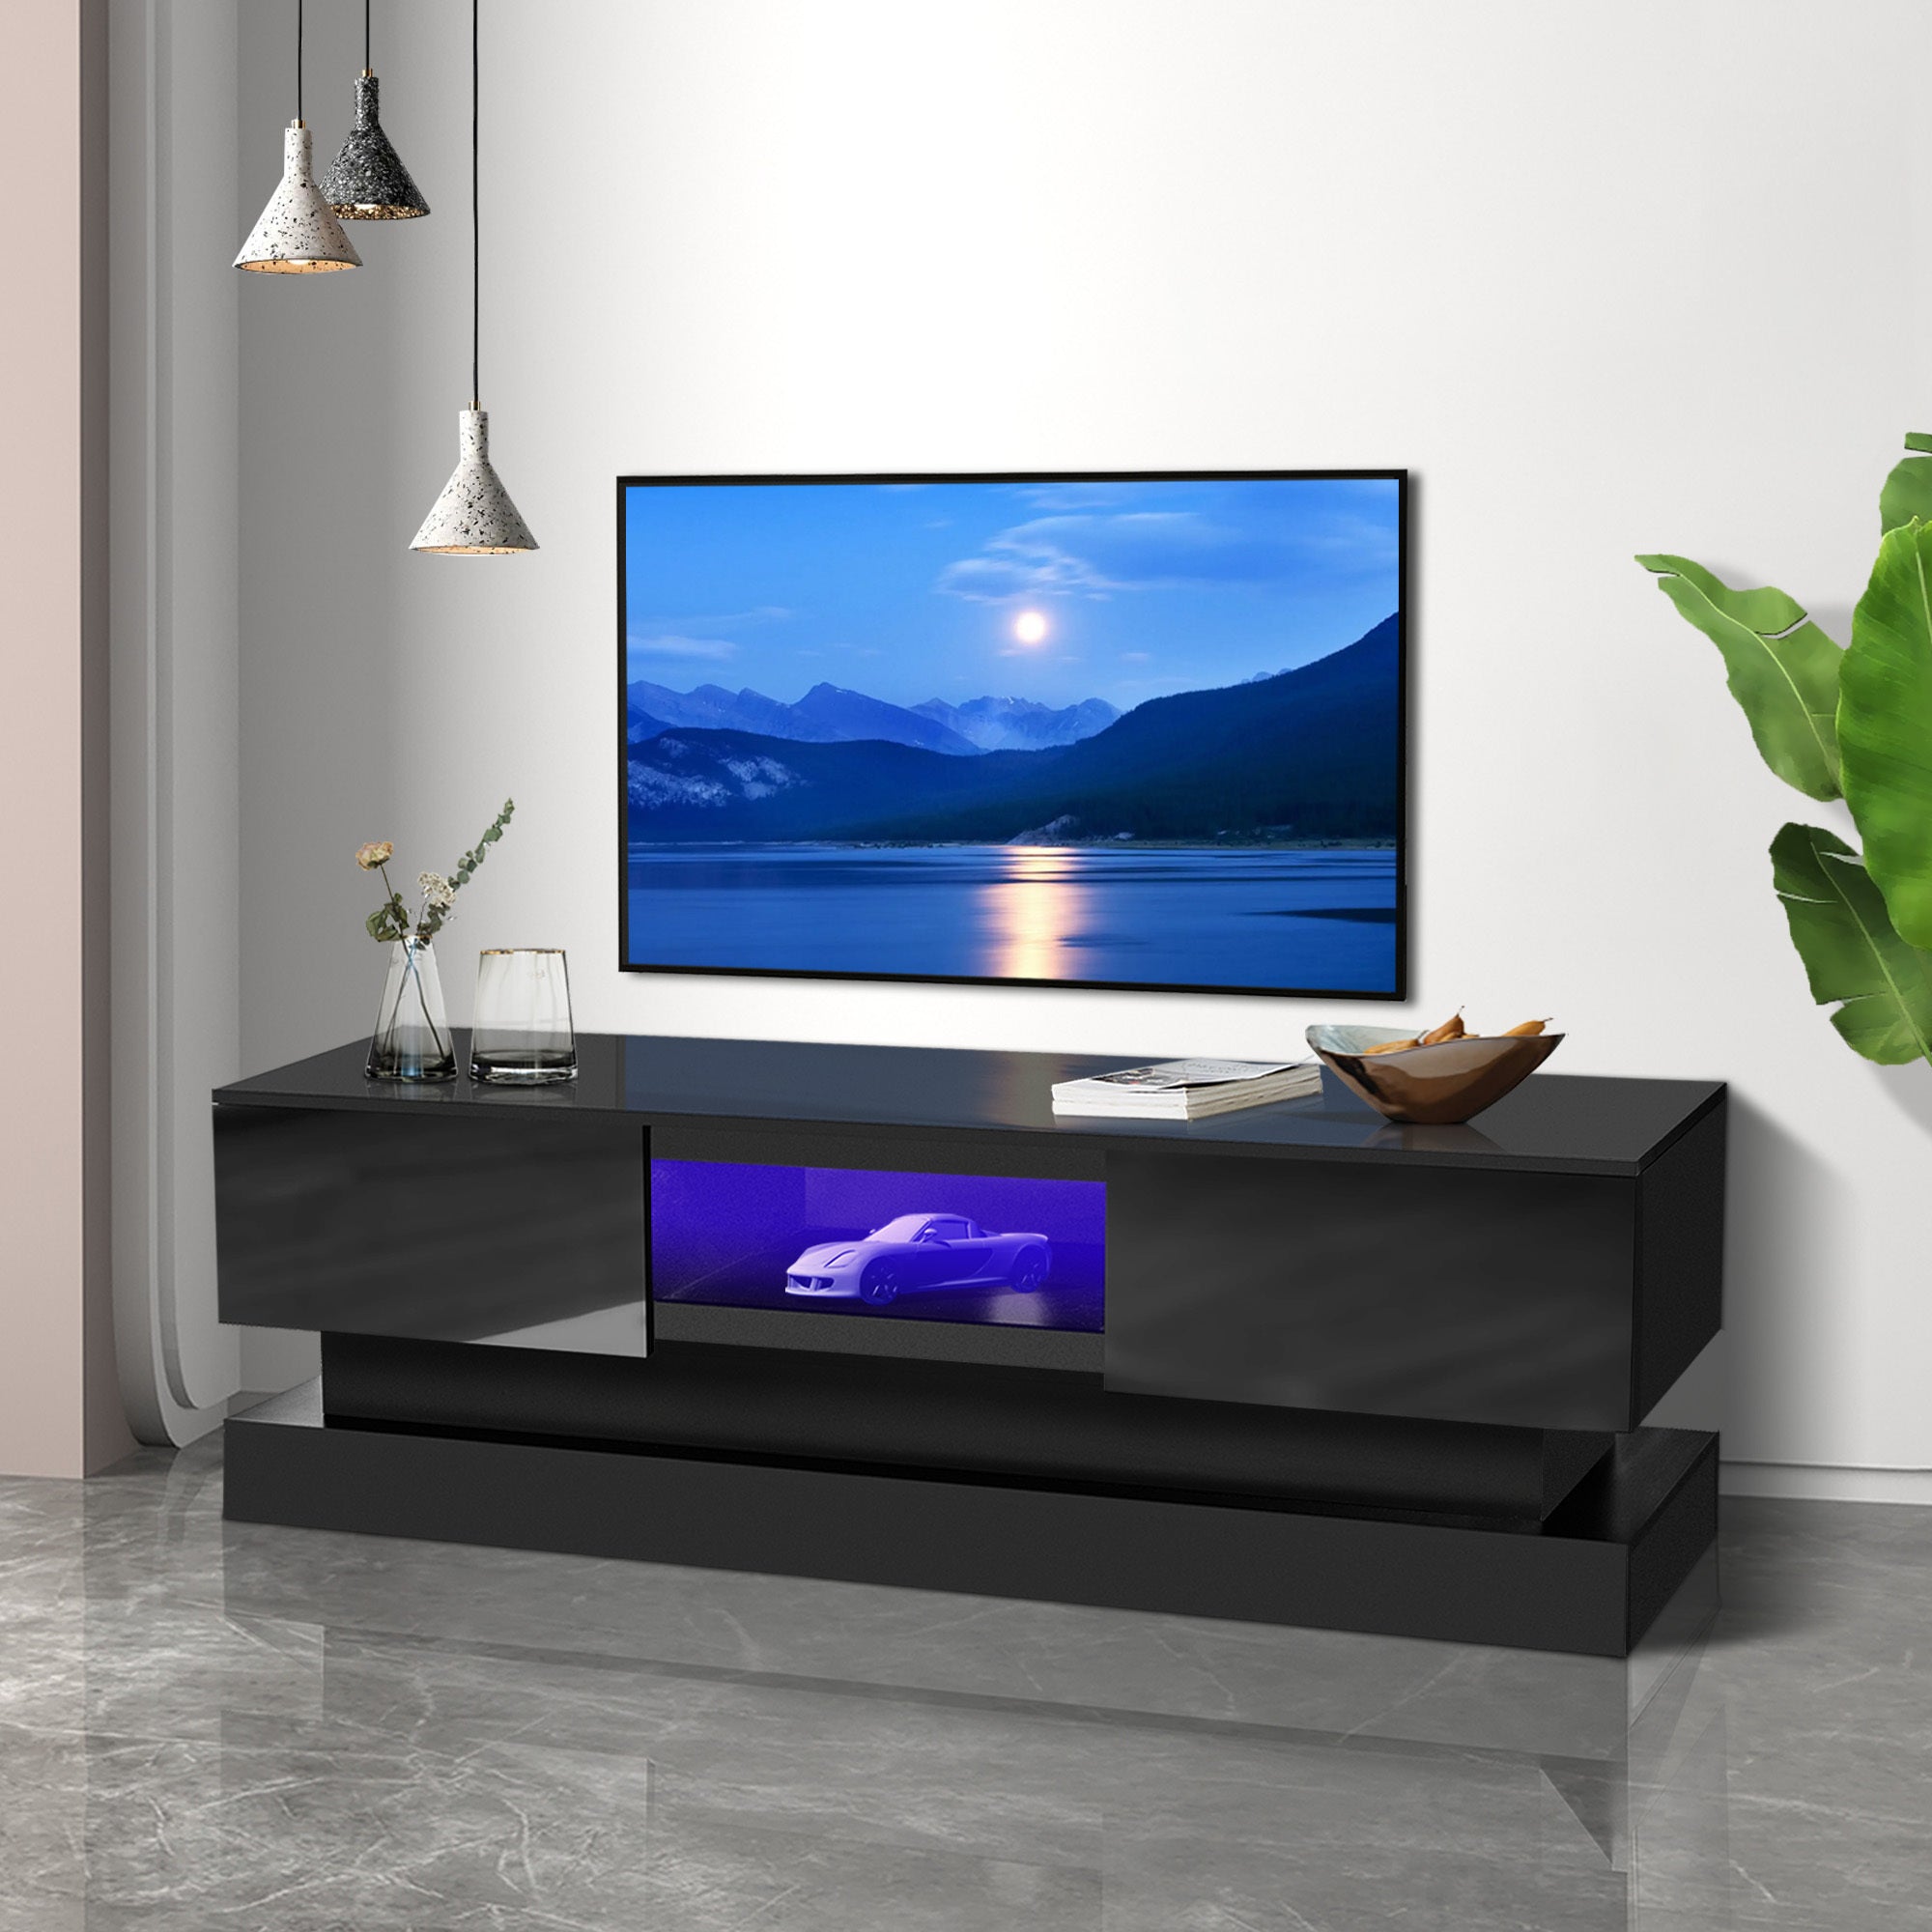 1.6M Black Modern TV Stand with LED Light (Black)